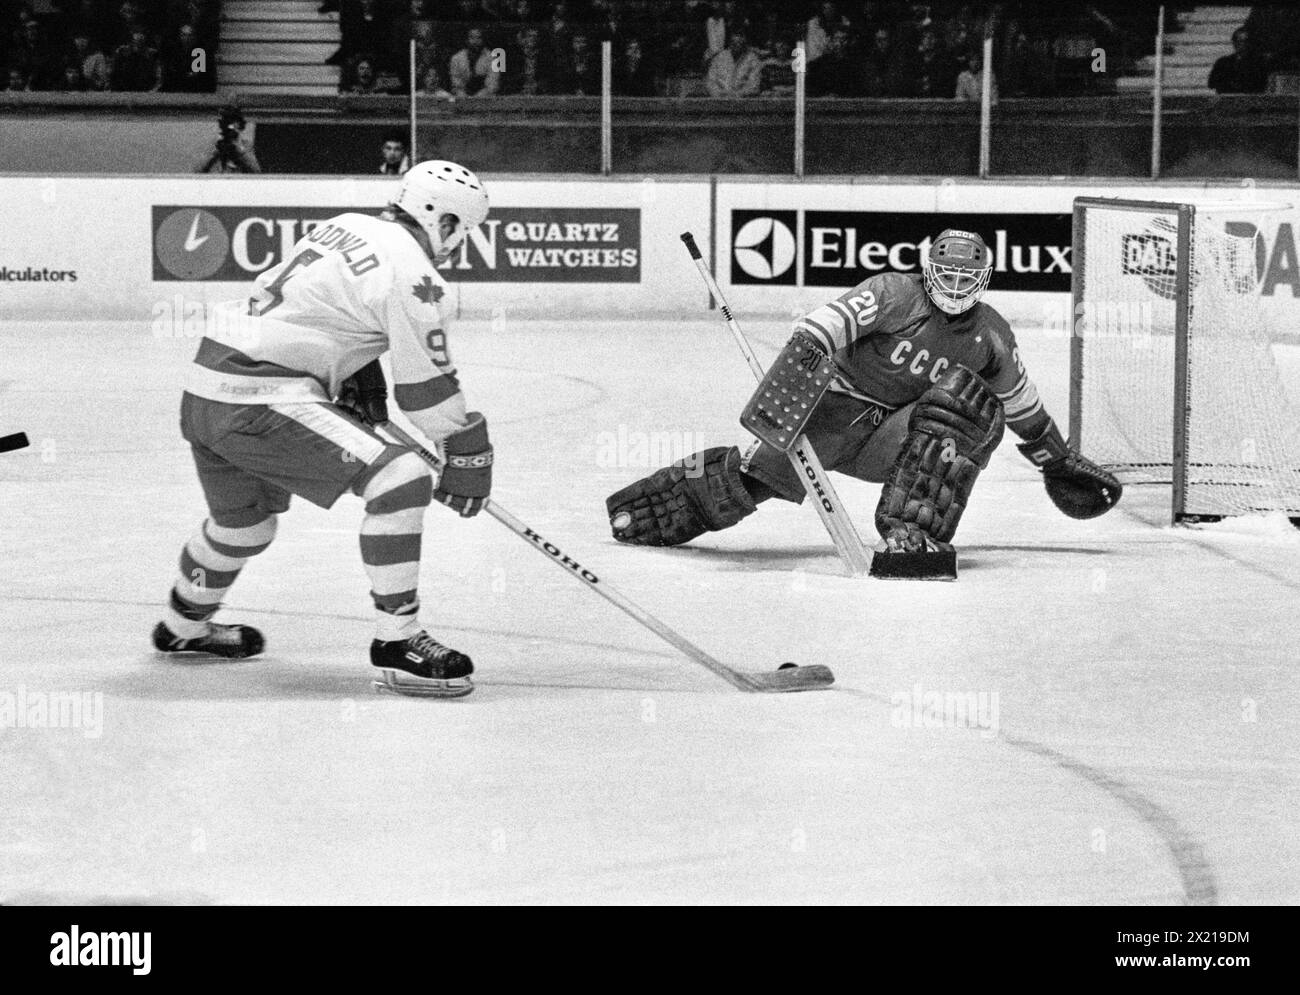 CANADA-SOVIET WORLD CHAMPIONSHIP IN SWEDEN 1981Canadas Larry McDonald try a shot against Vladislav Tretyak Soviet goalkeeper Stock Photo